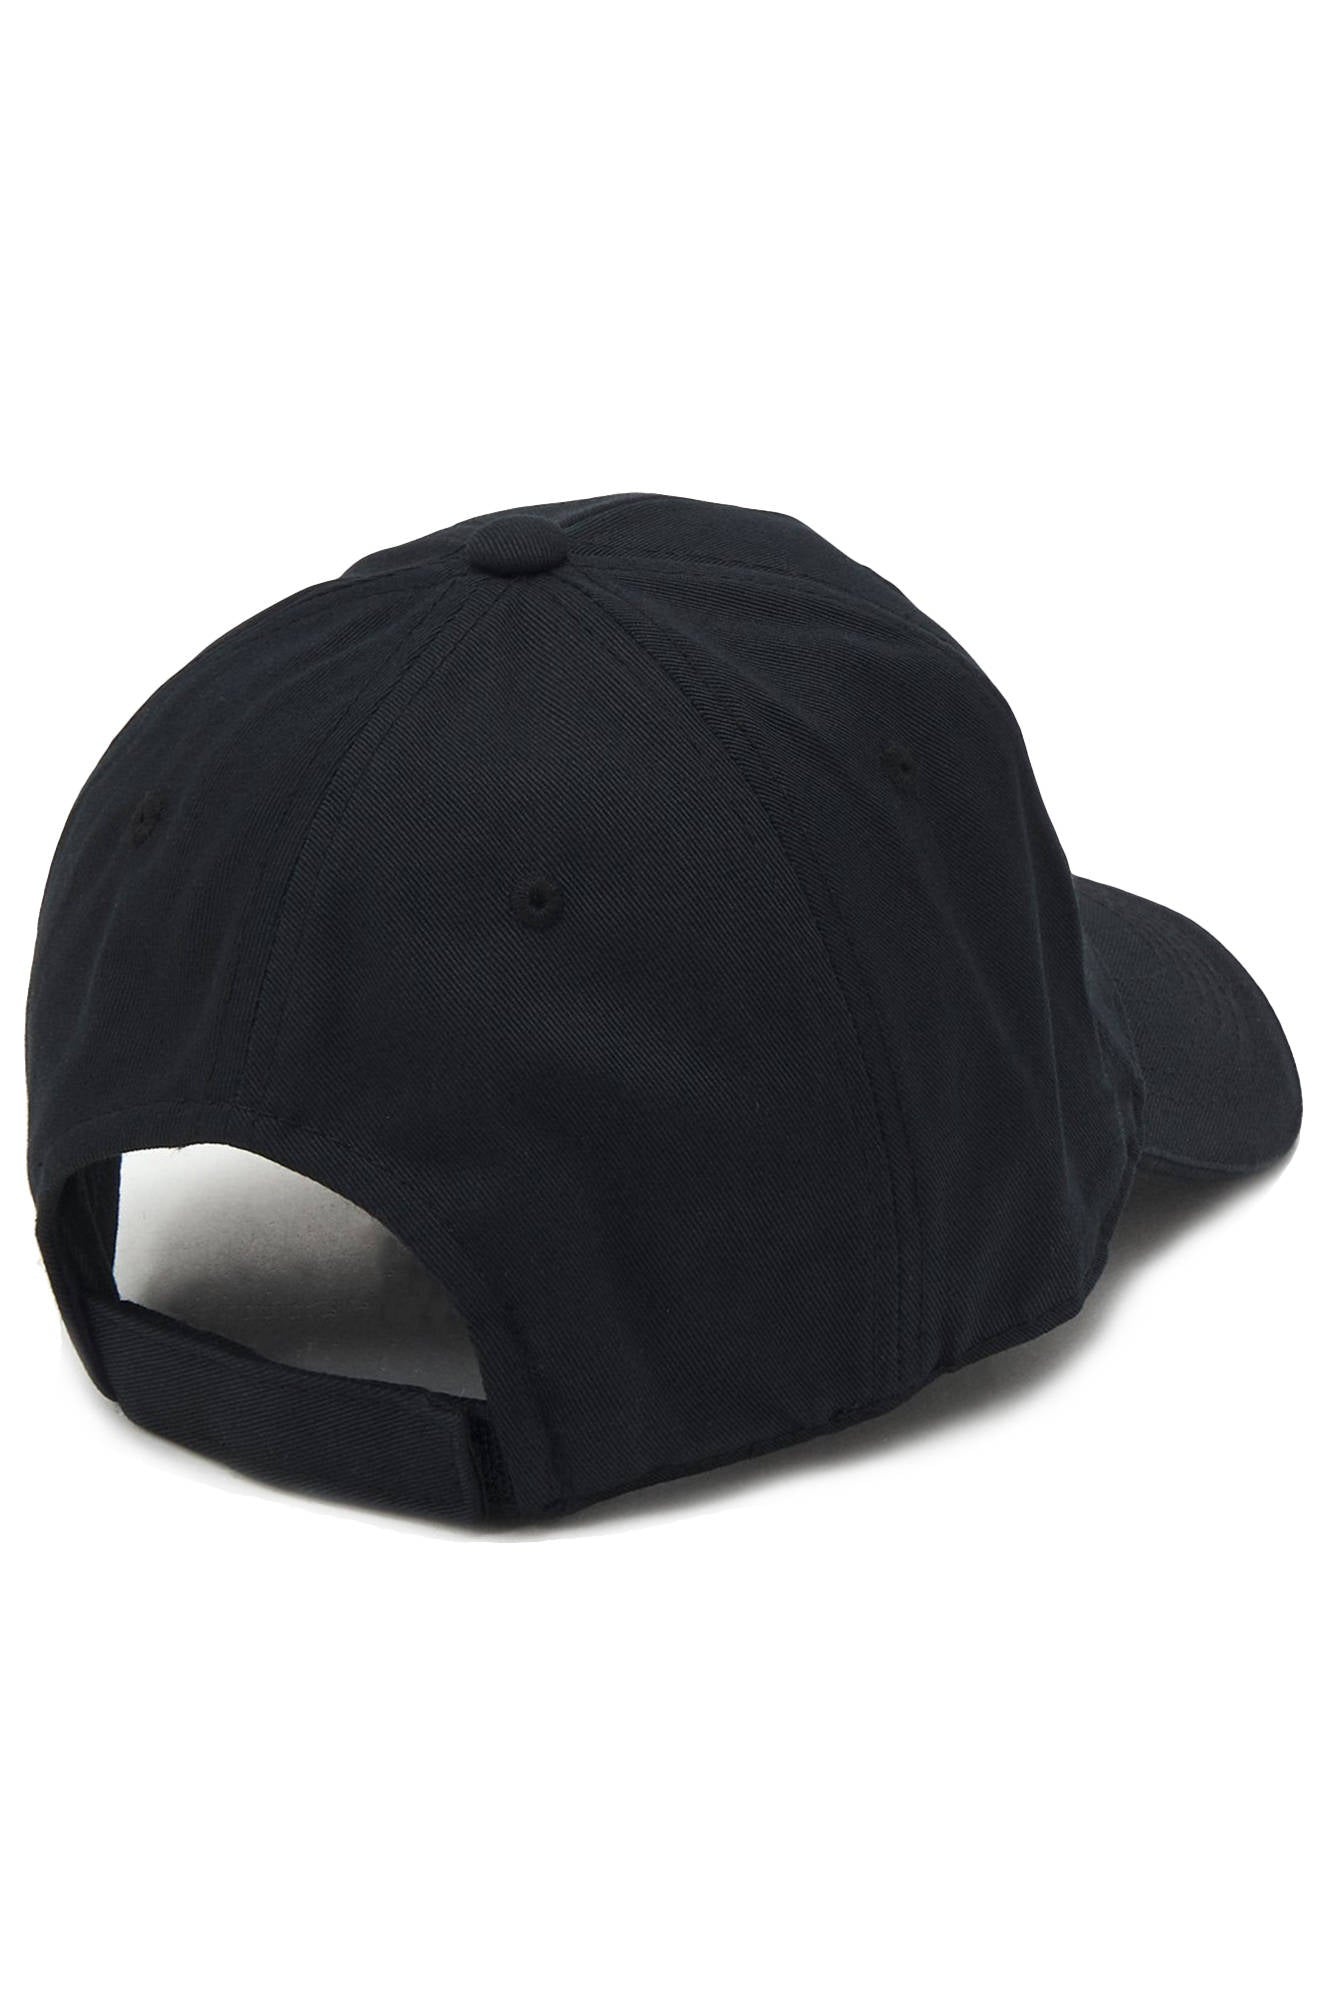 Just Cavalli Black Hats & Cap - Fizigo